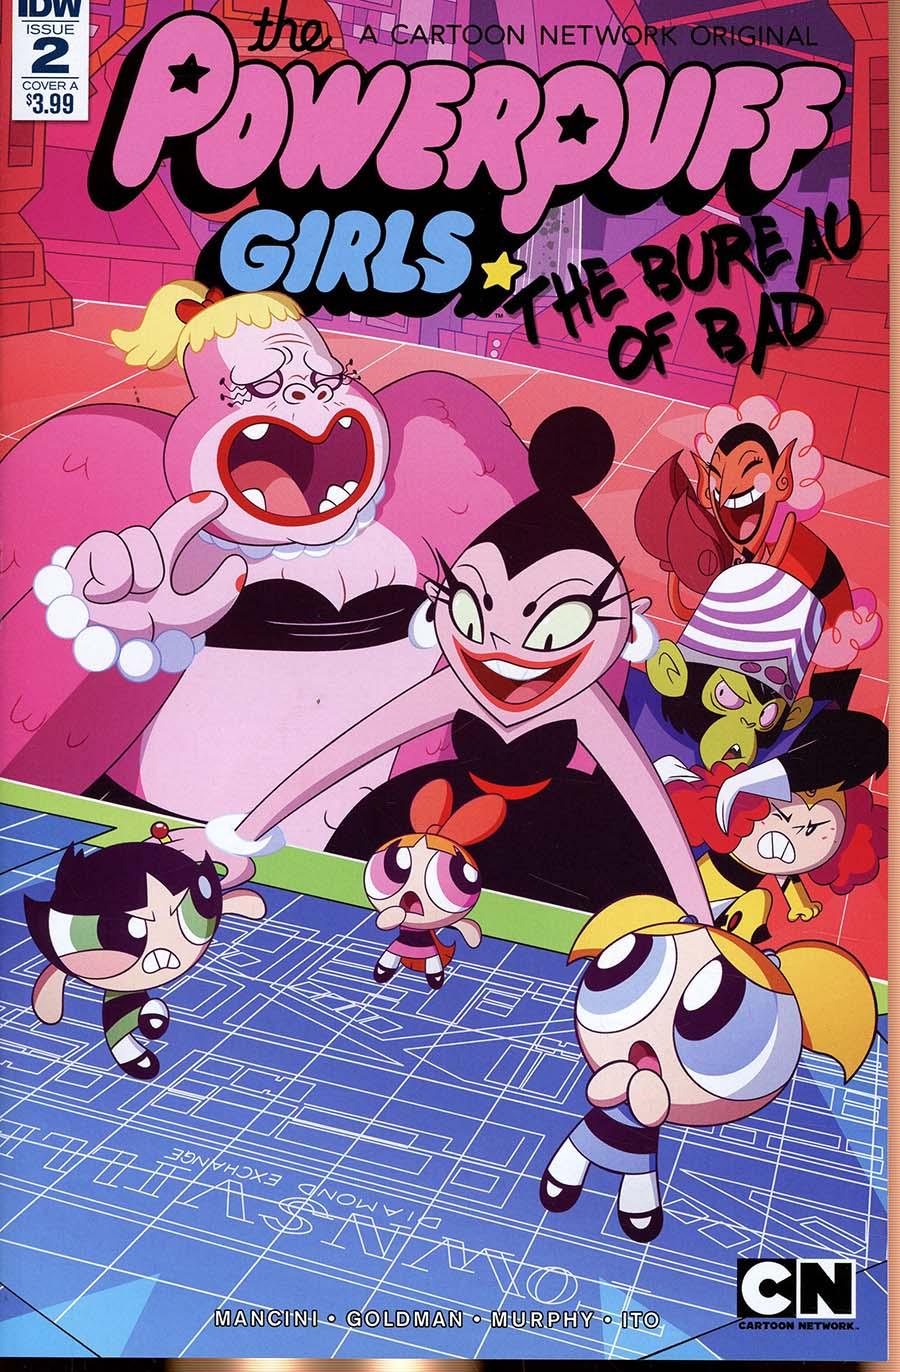 Powerpuff Girls Bureau Of Bad Vol. 1 #2